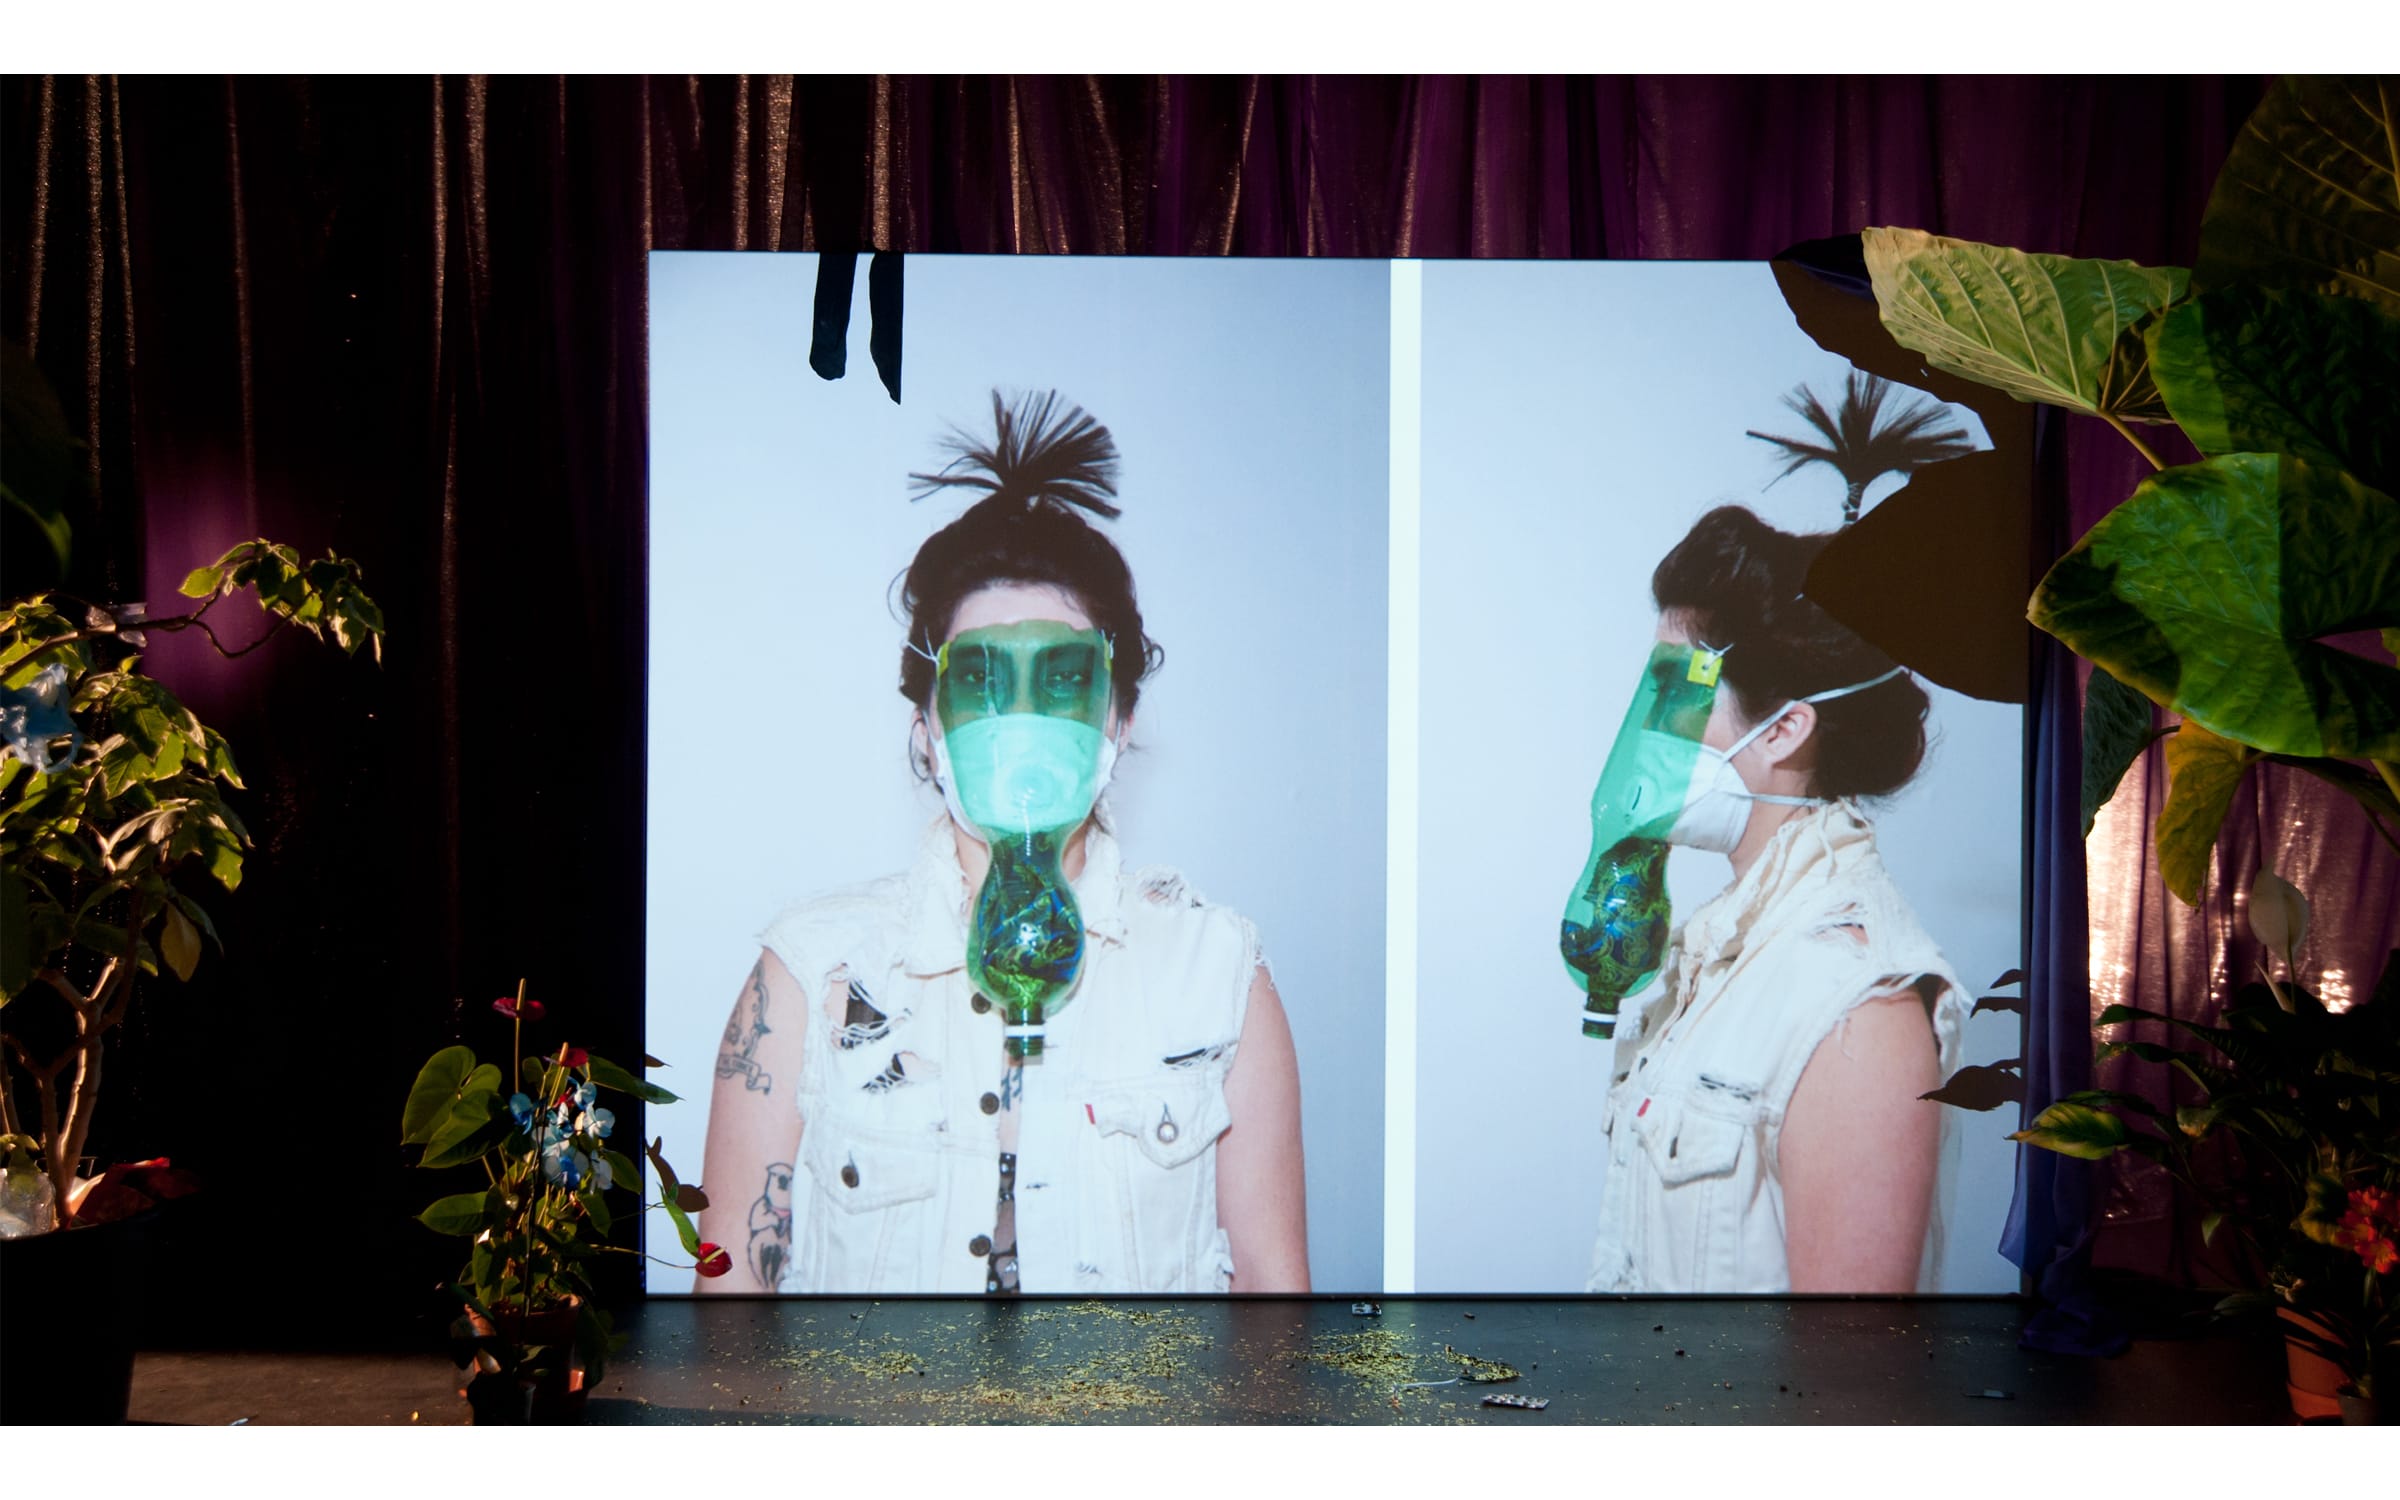 Pauline Boudry/Renate Lorenz, Toxic, 2012. Courtesy of the artists and Ellen de Bruijne Projects, Amsterdam.